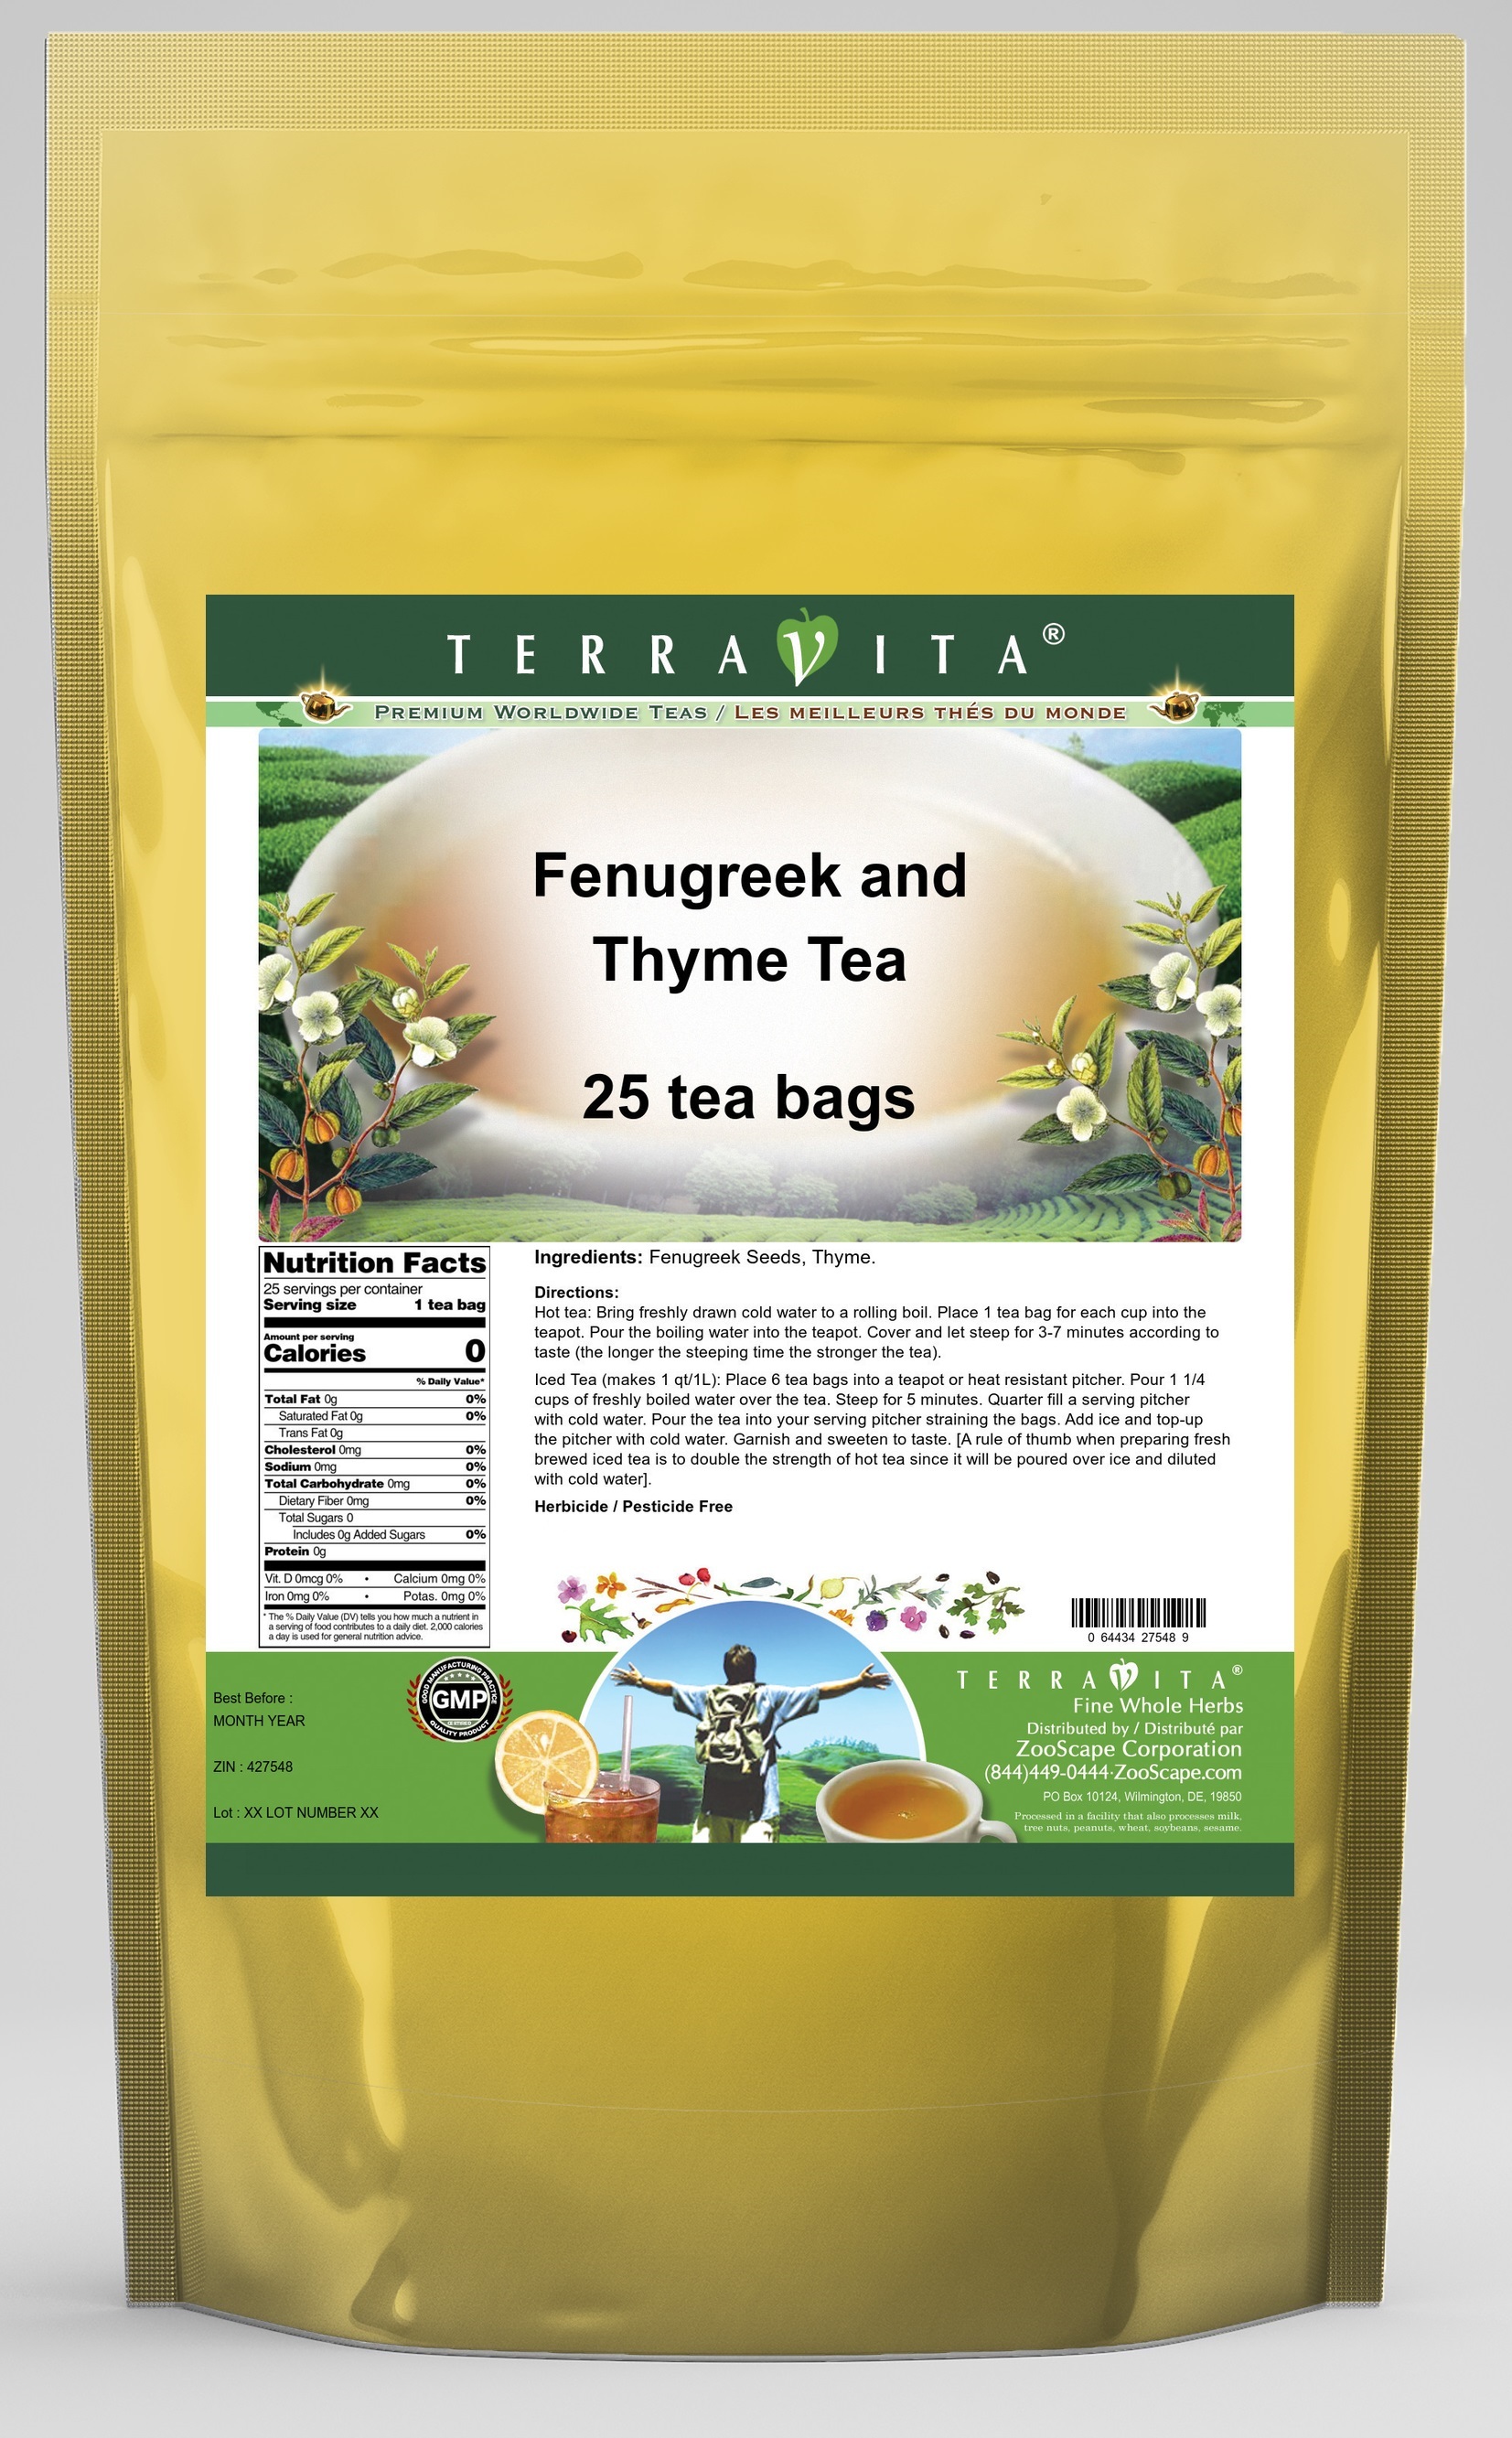 Fenugreek and Thyme Tea